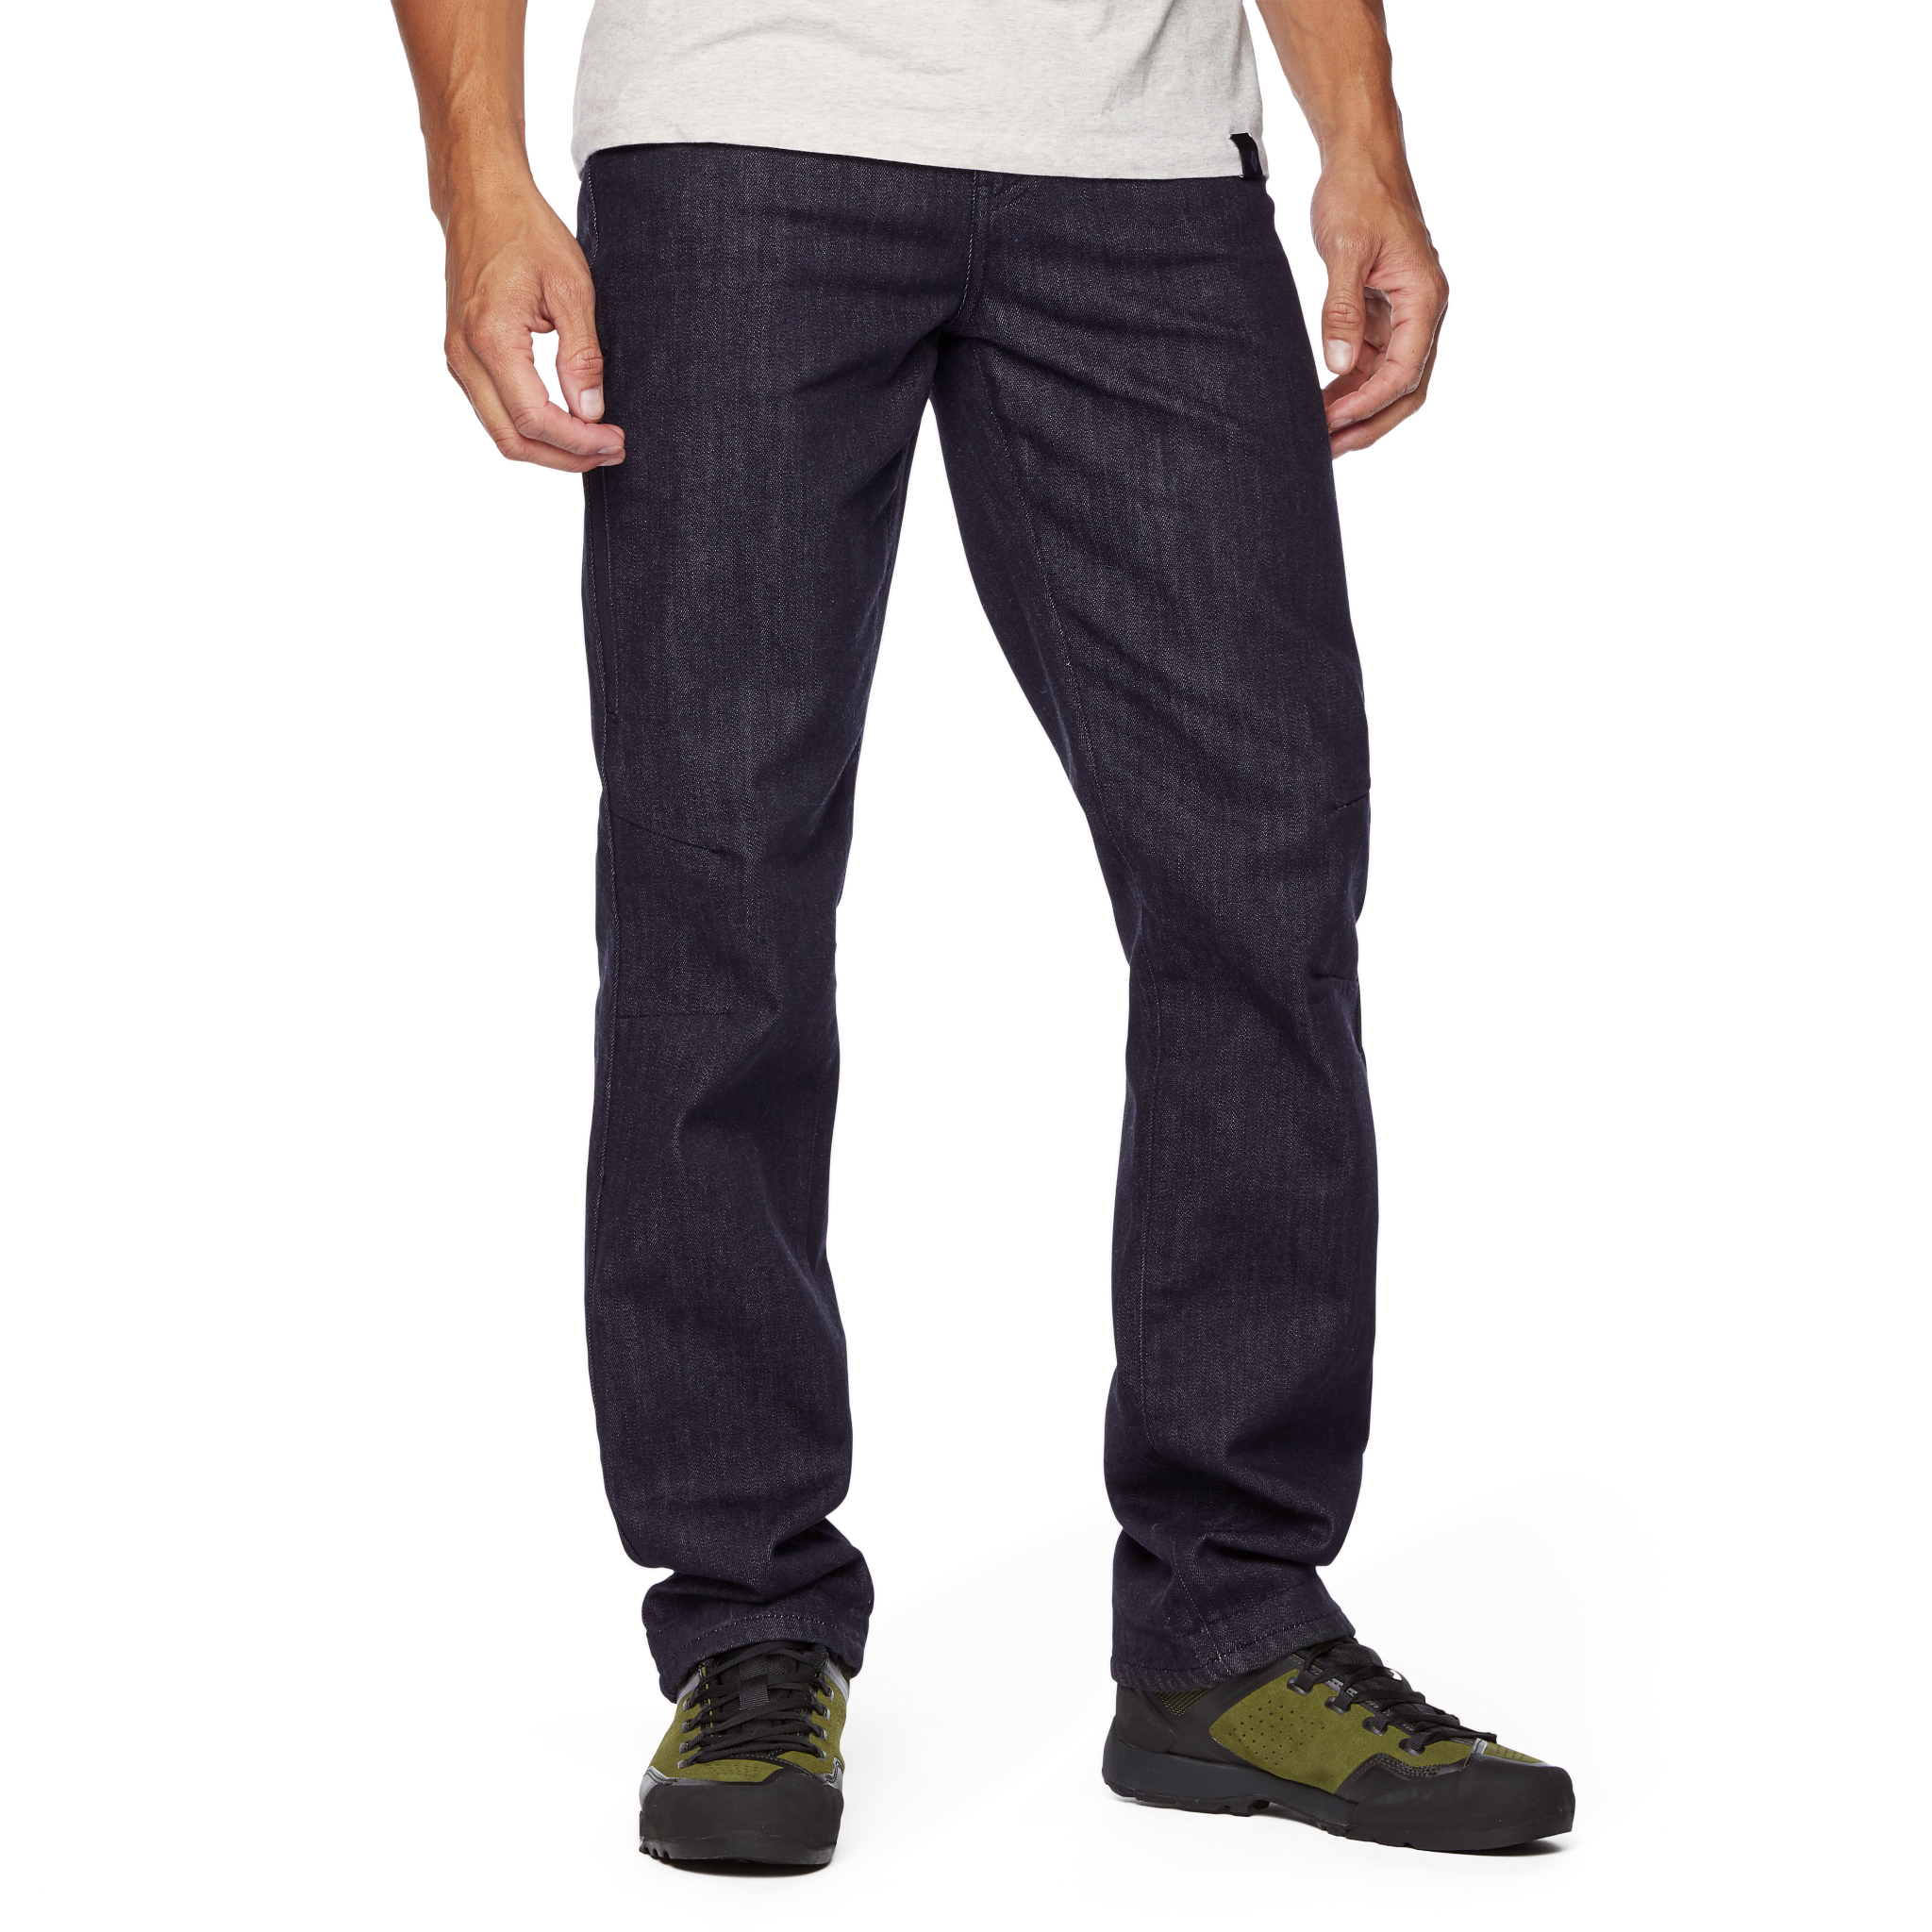 Black Diamond Equipment Men's Mission Wool Denim Pants Size 28, in Dark Grey